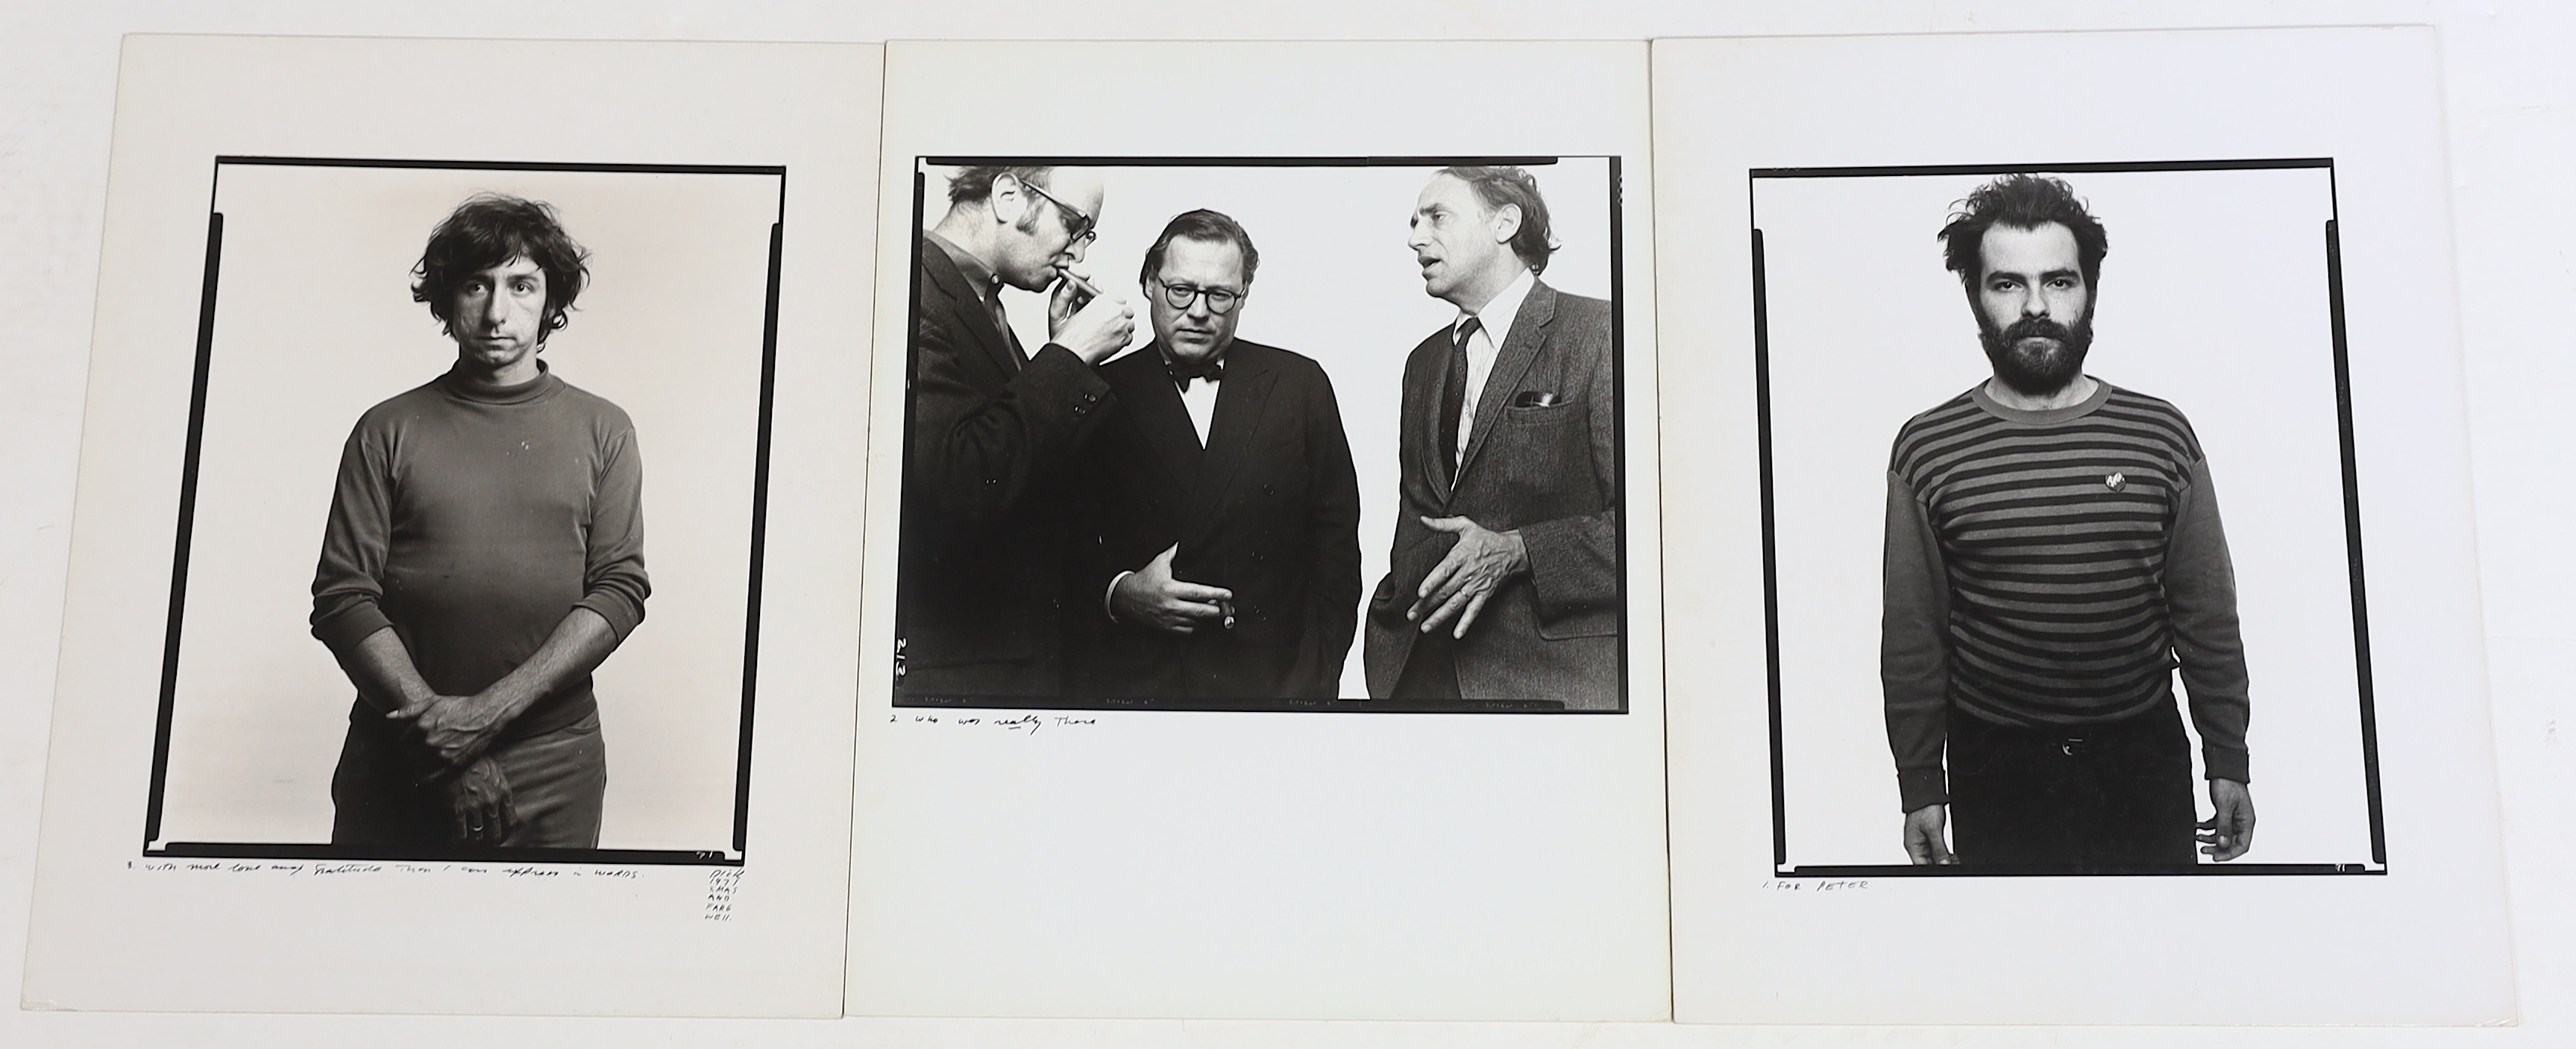 Richard Avedon (American, 1923-2004), 'The Chicago Seven sessions', set of three gelatin silver prints, 35 x 28cm